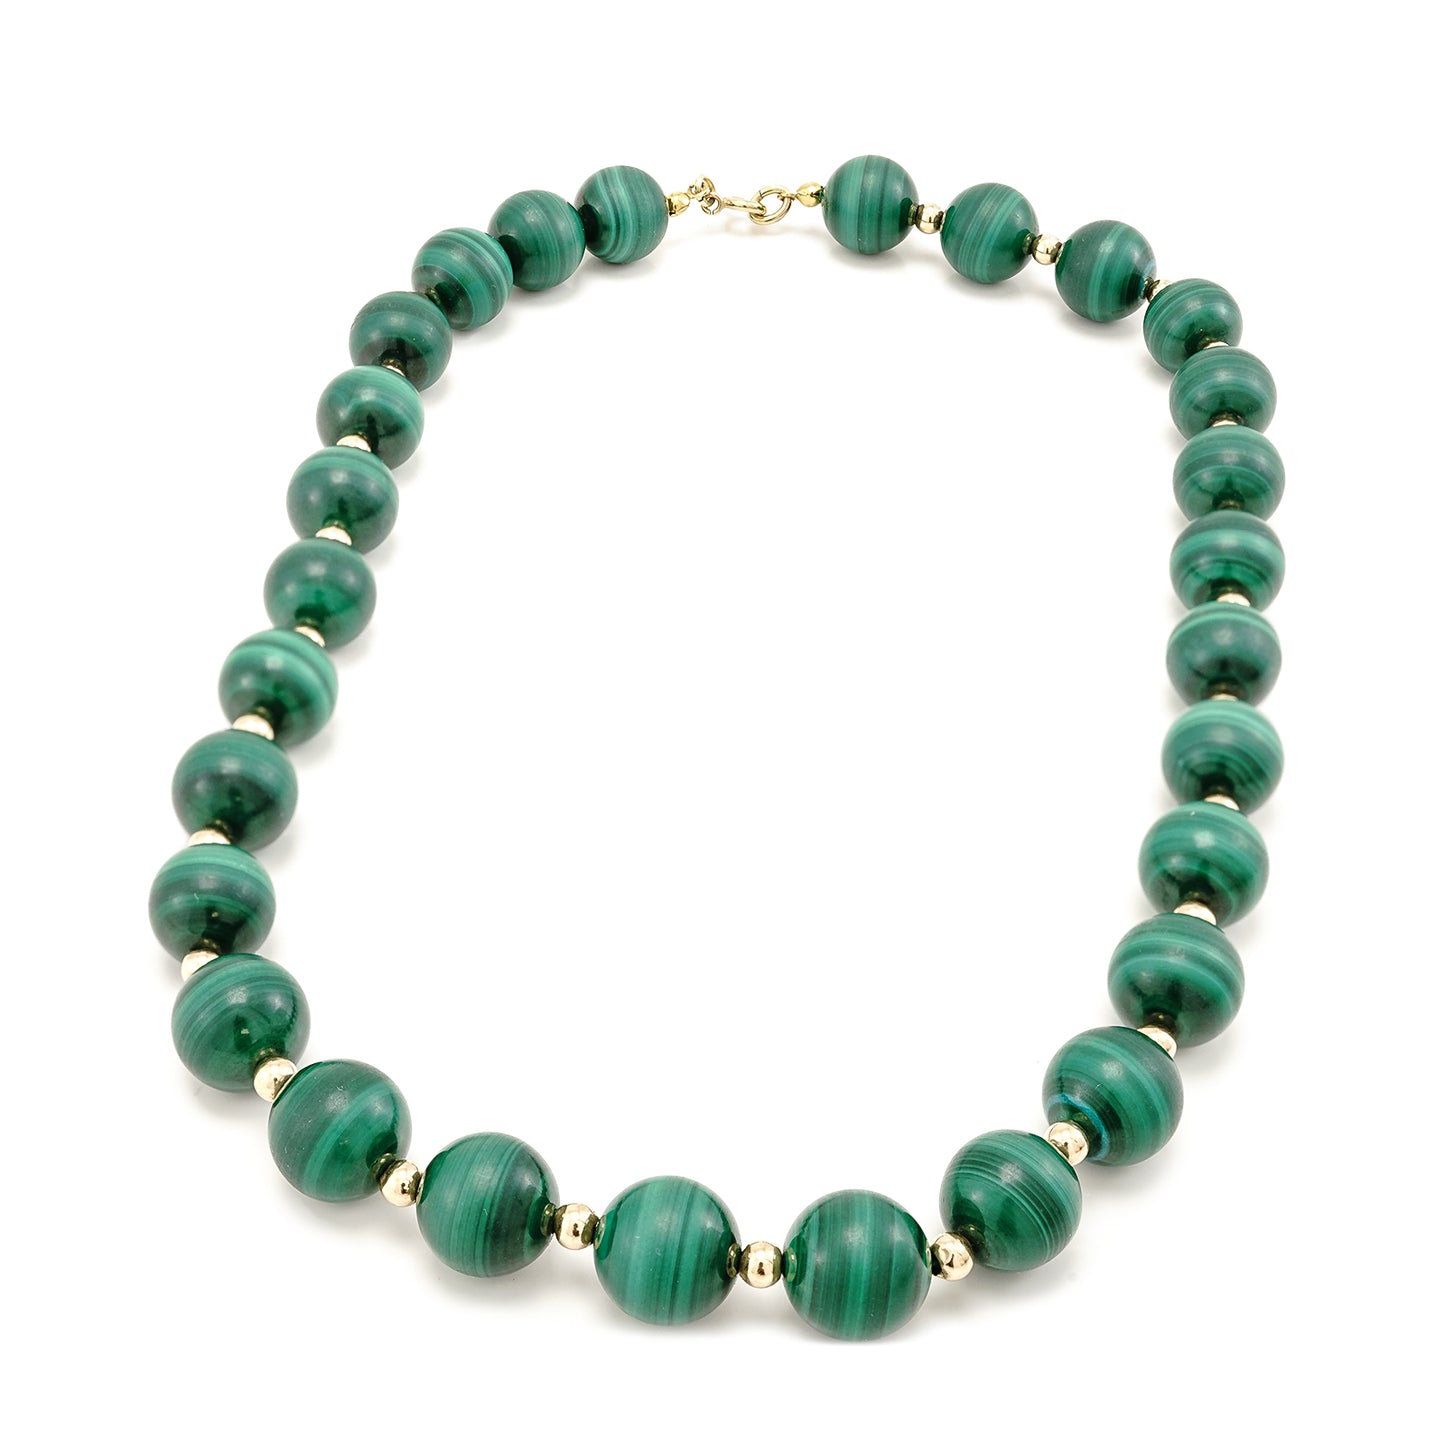 Malachite necklace necklace yellow gold 585 14K 45cm women's jewelry gemstone necklace 97.9g